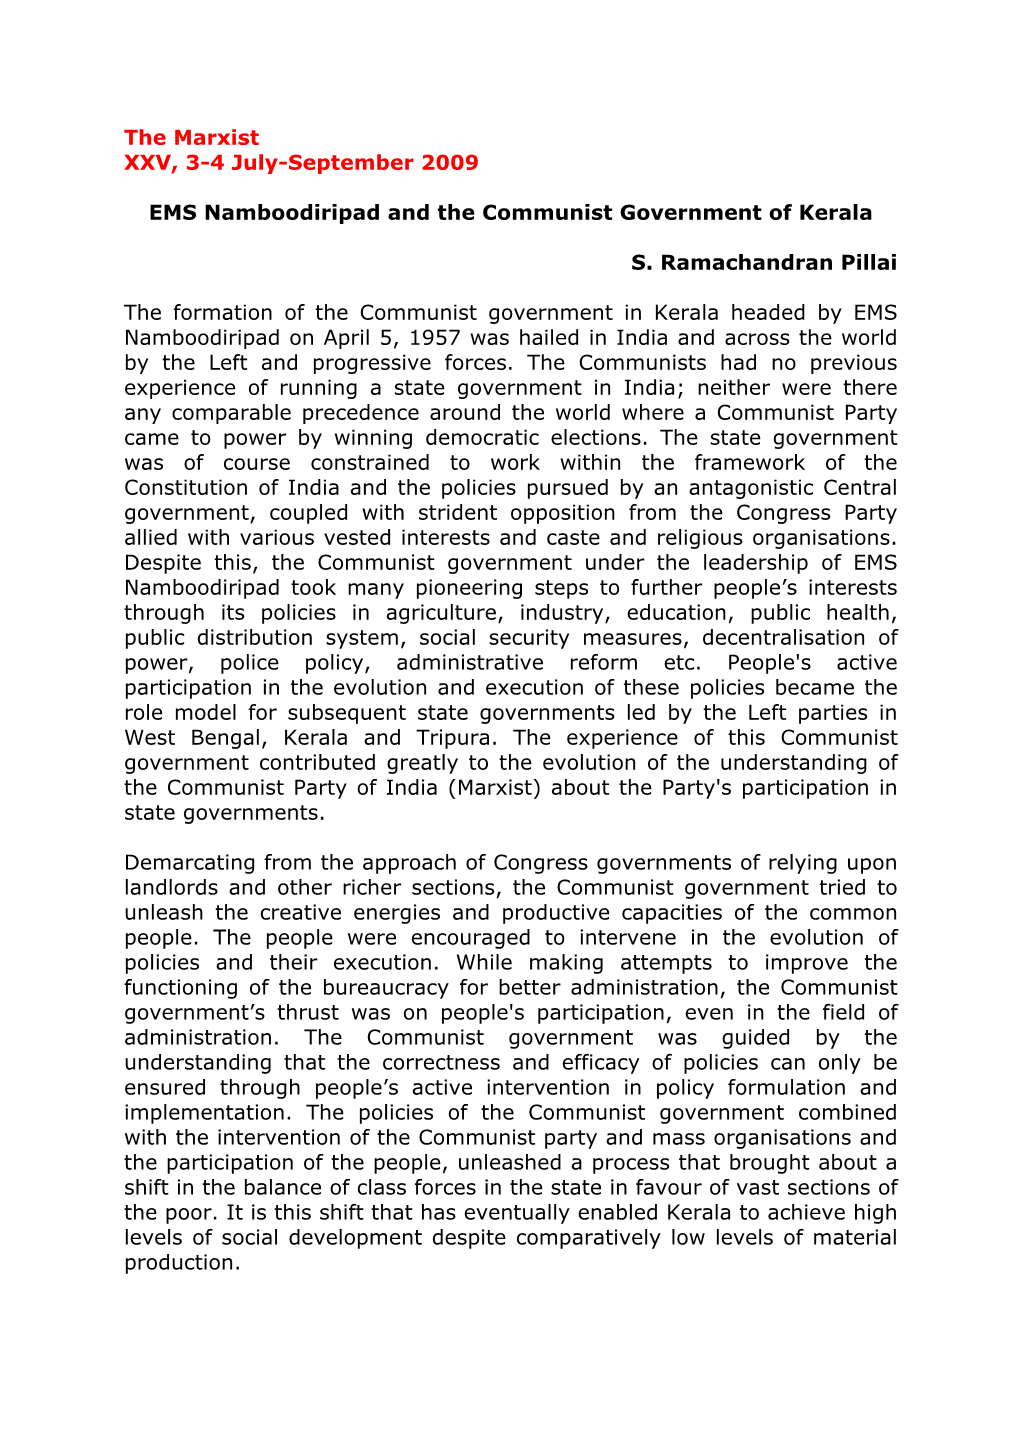 EMS Namboodiripad and the Communist Government of Kerala